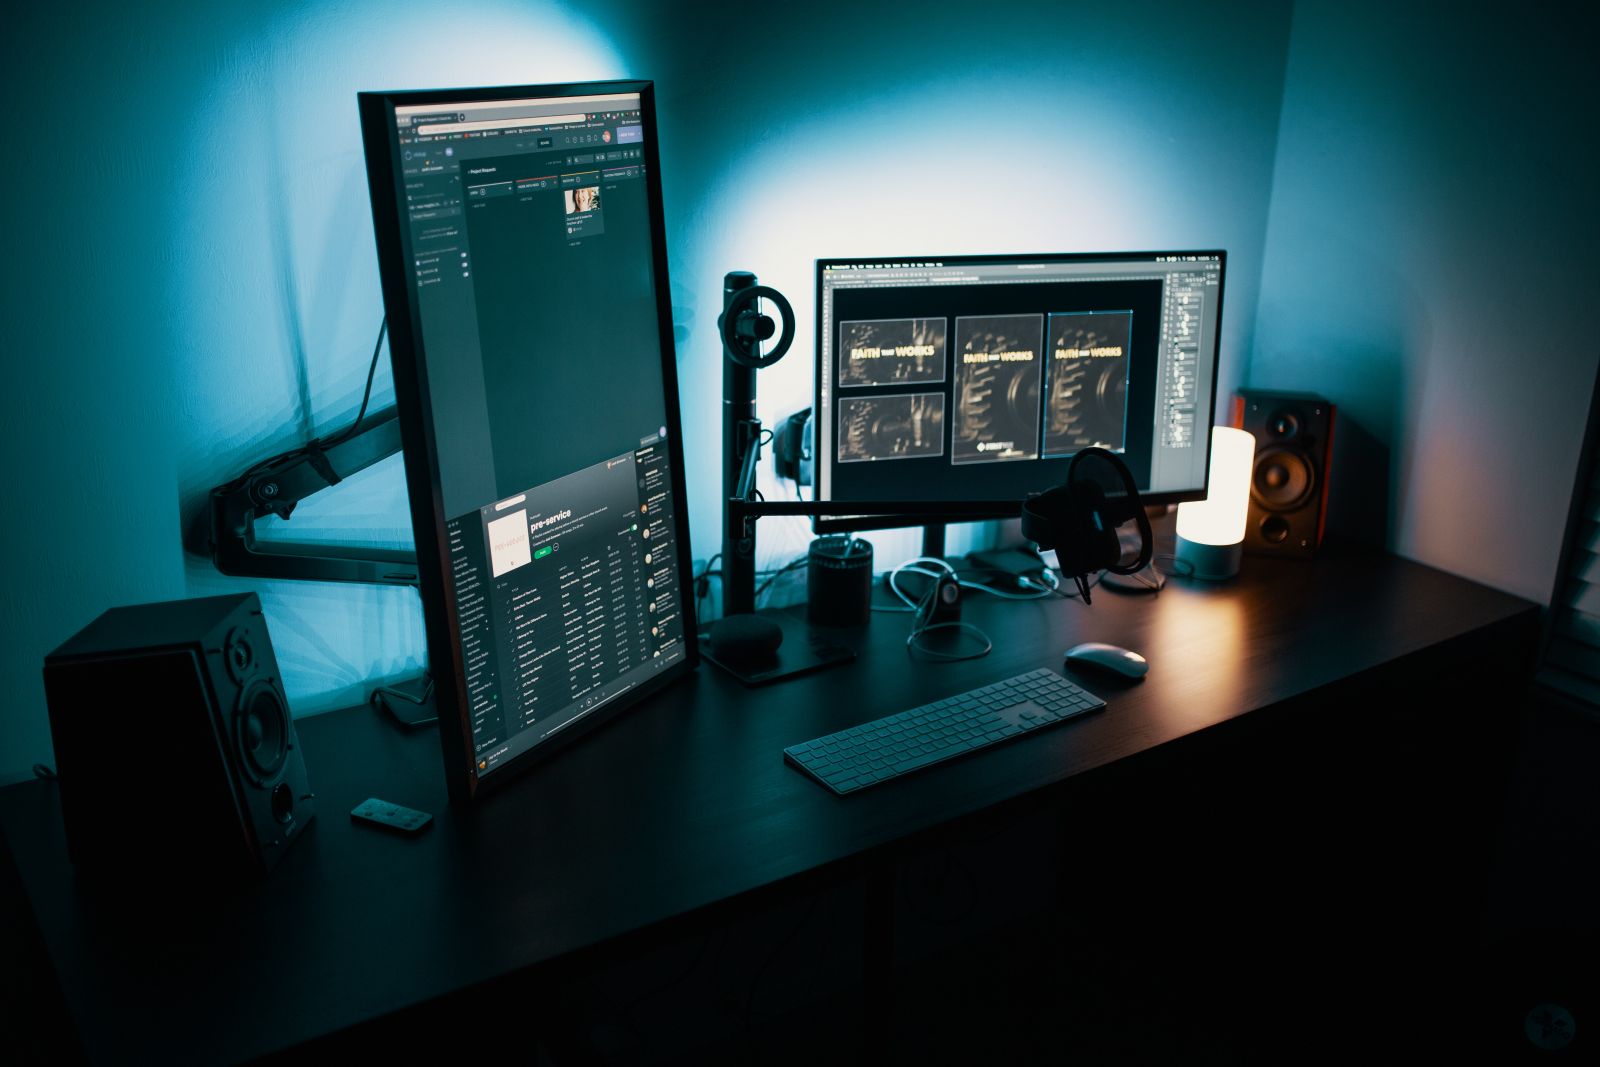 Computer and monitors banner image